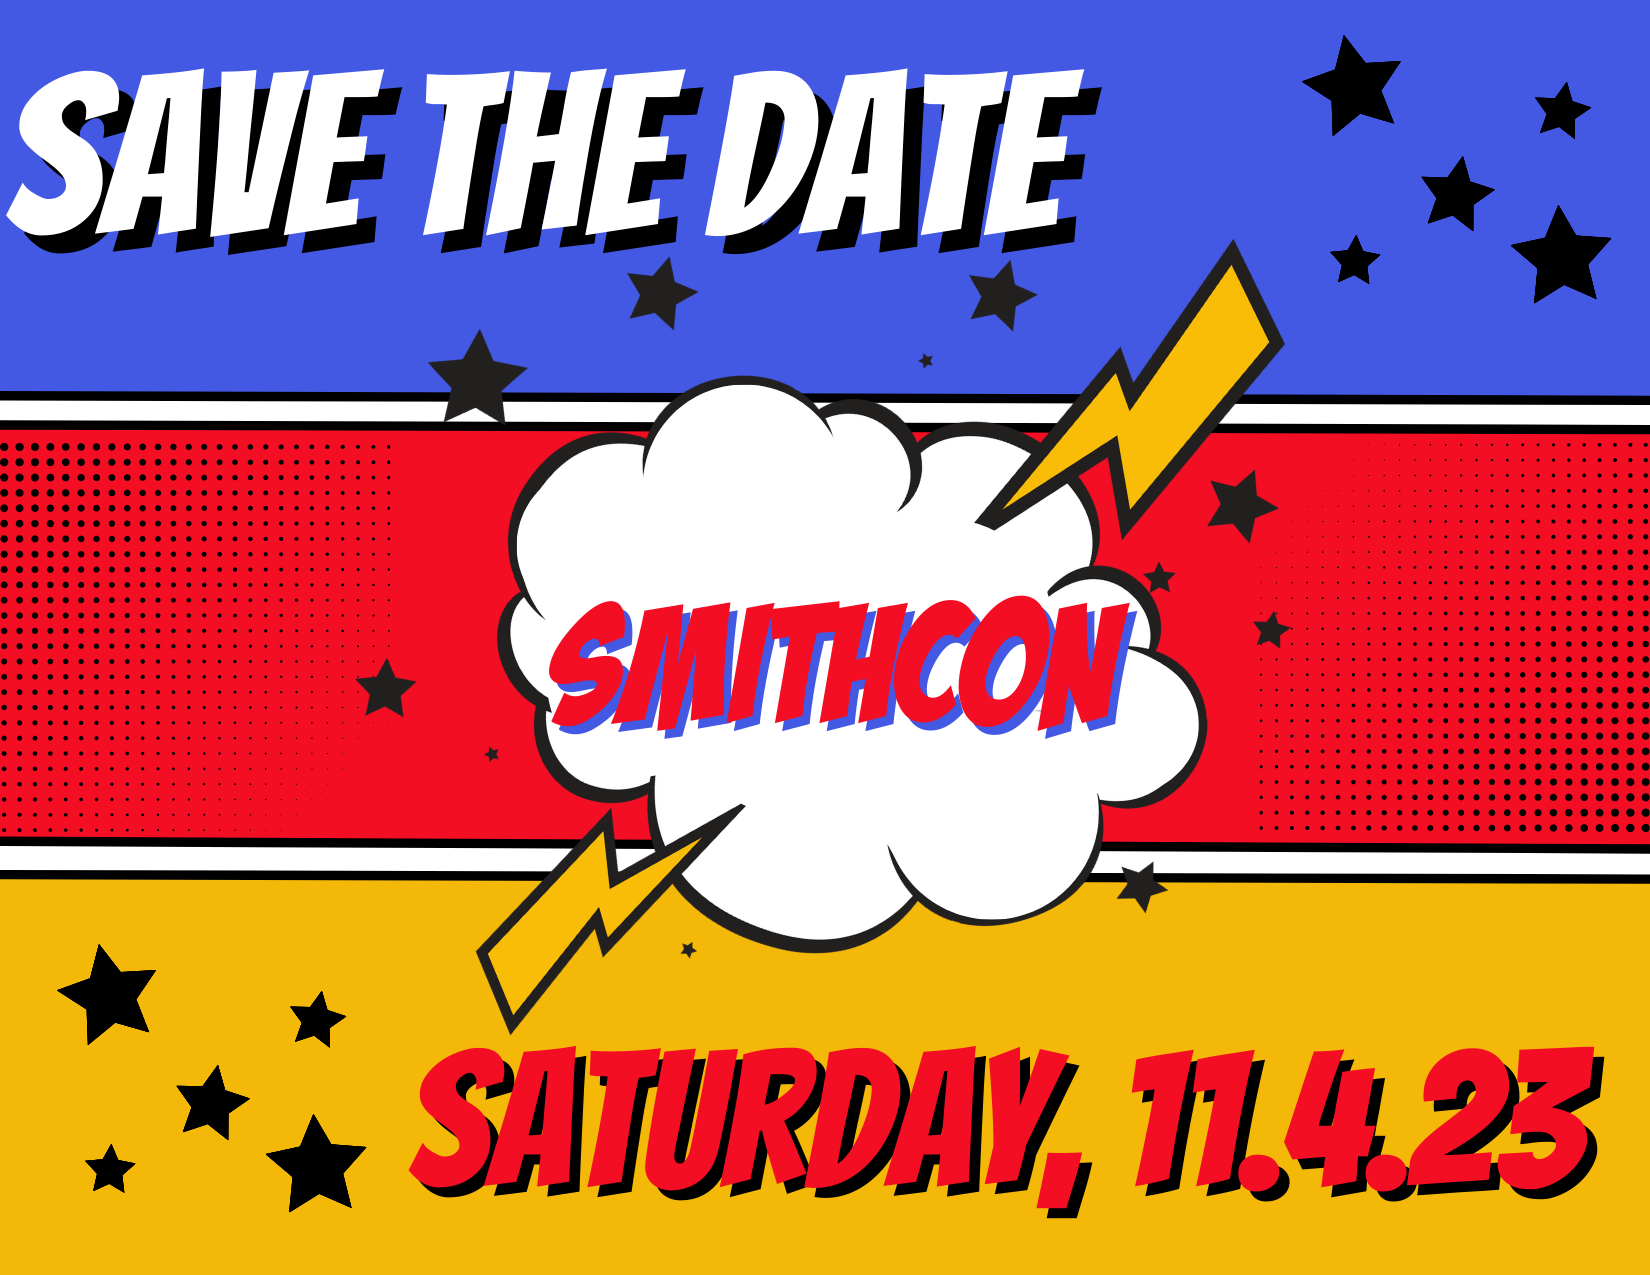 Smithcon: Save the Date Saturday November 4. 2023